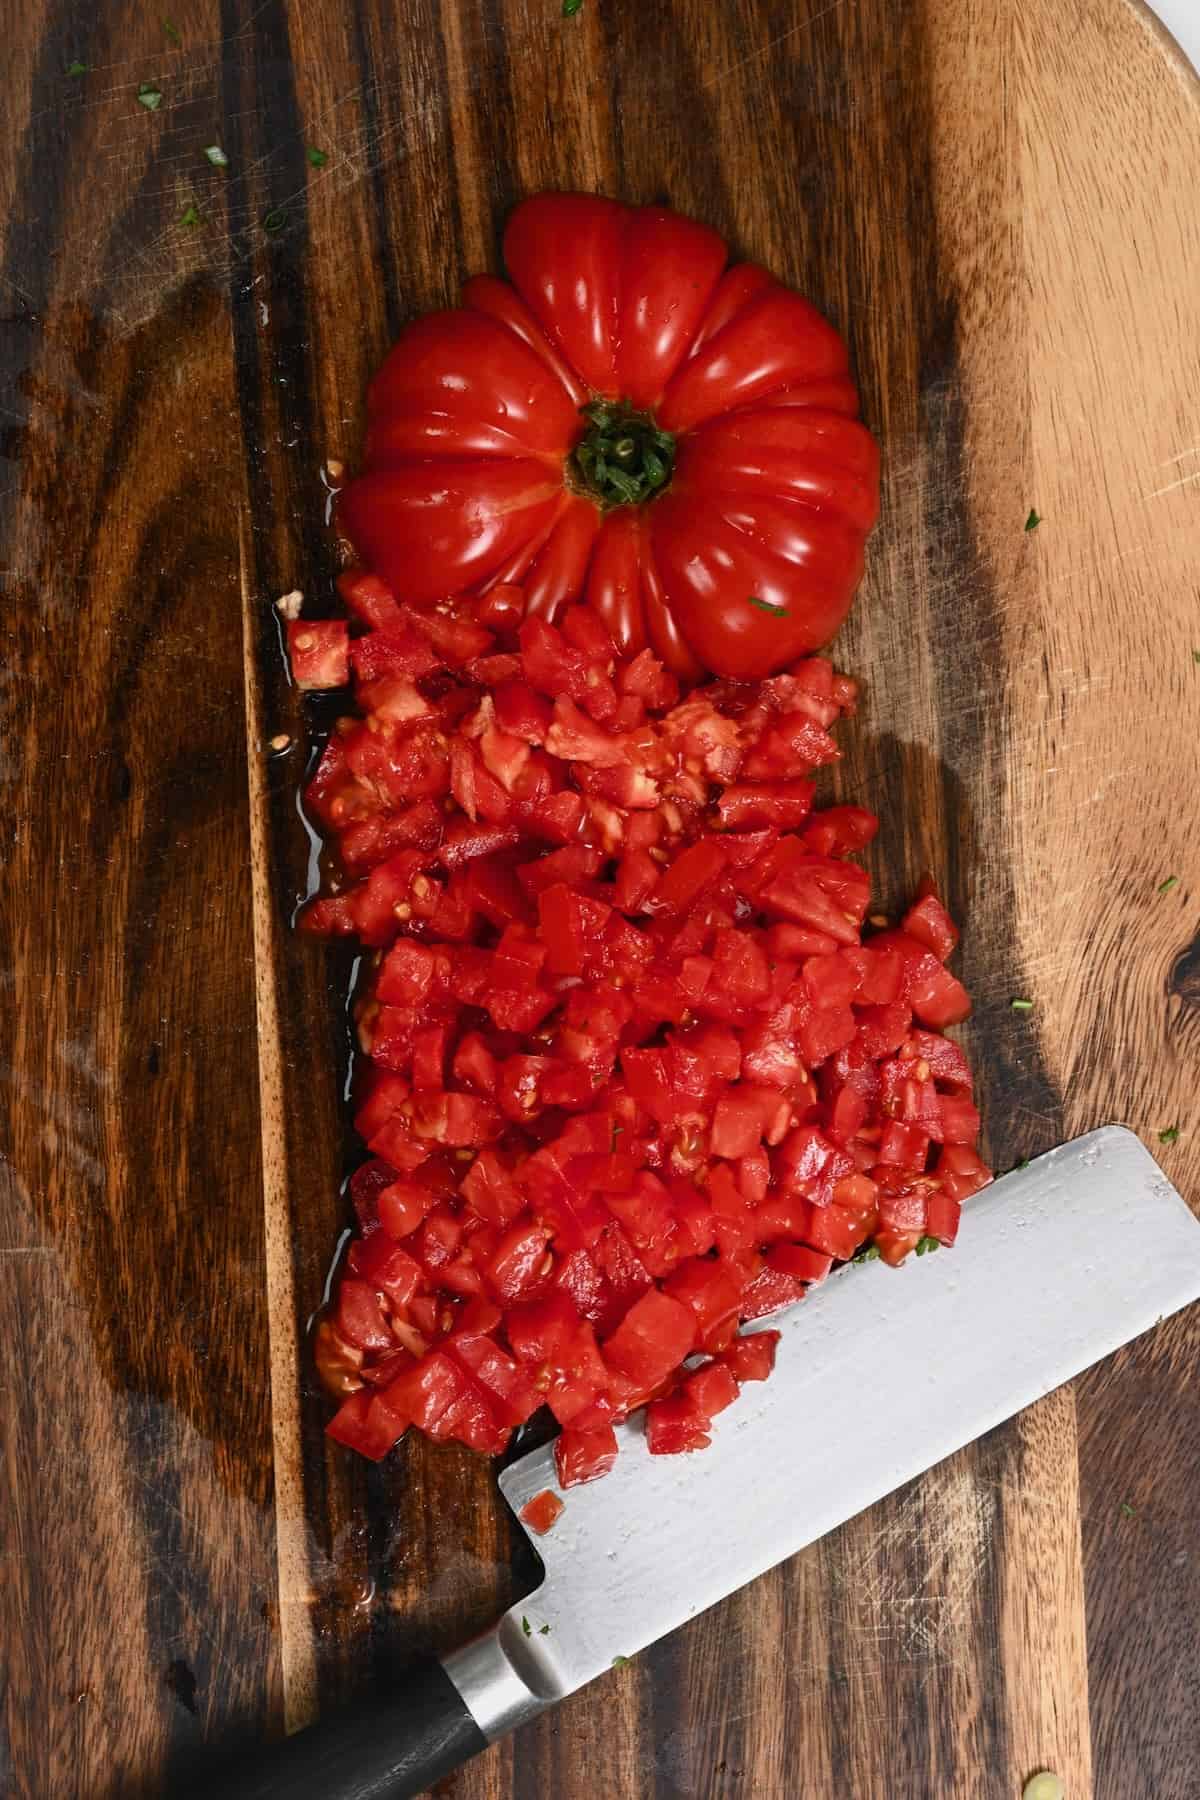 Chopped tomato on a cutting board